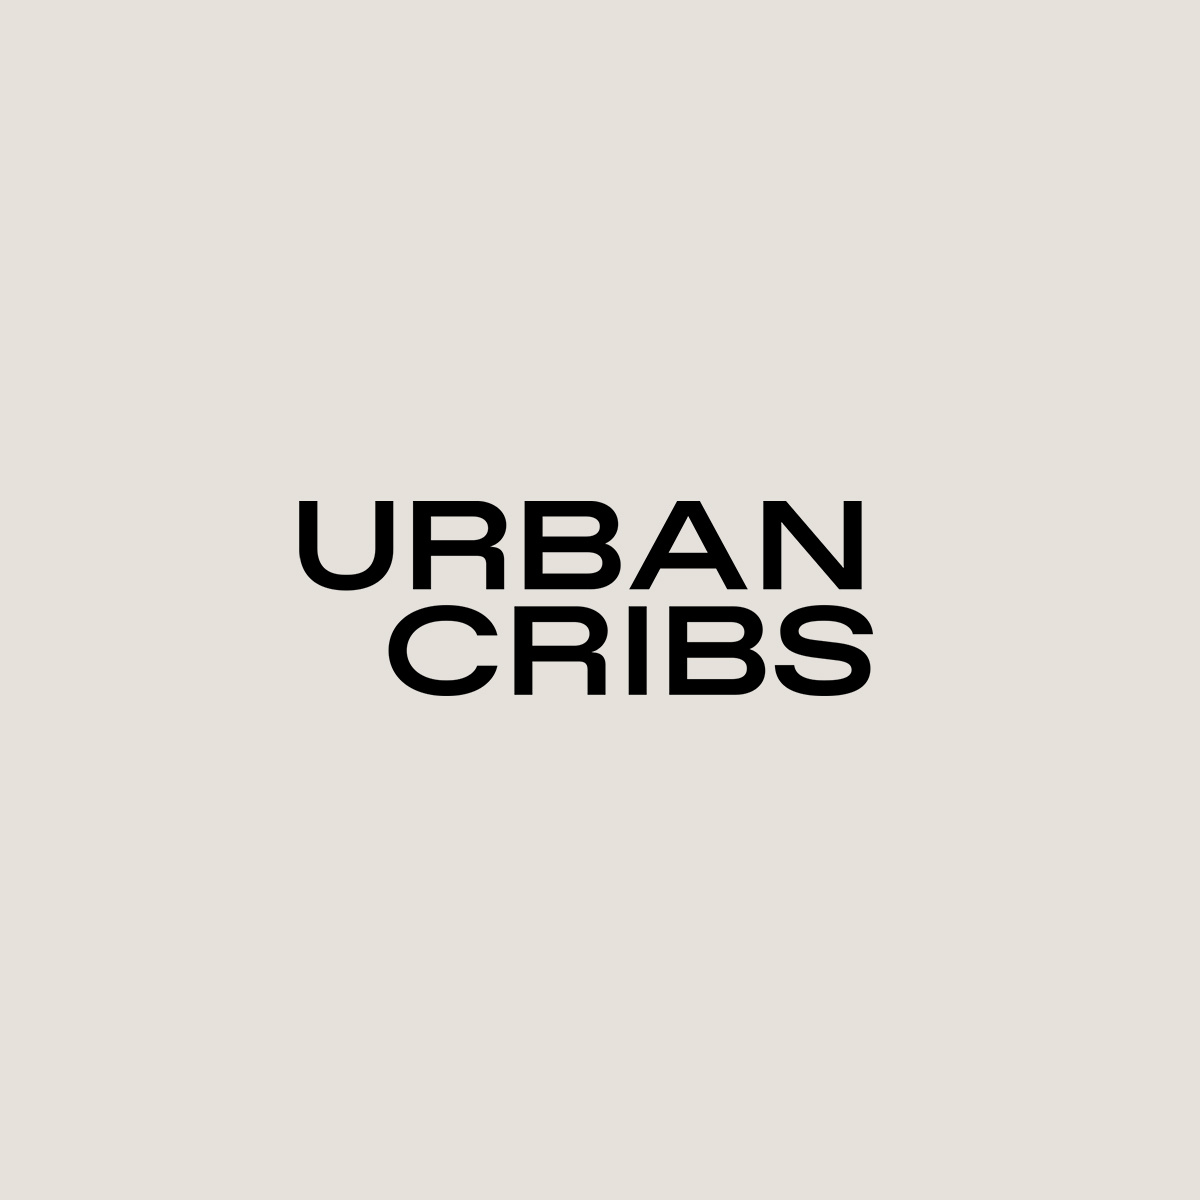 urban cribs property brand